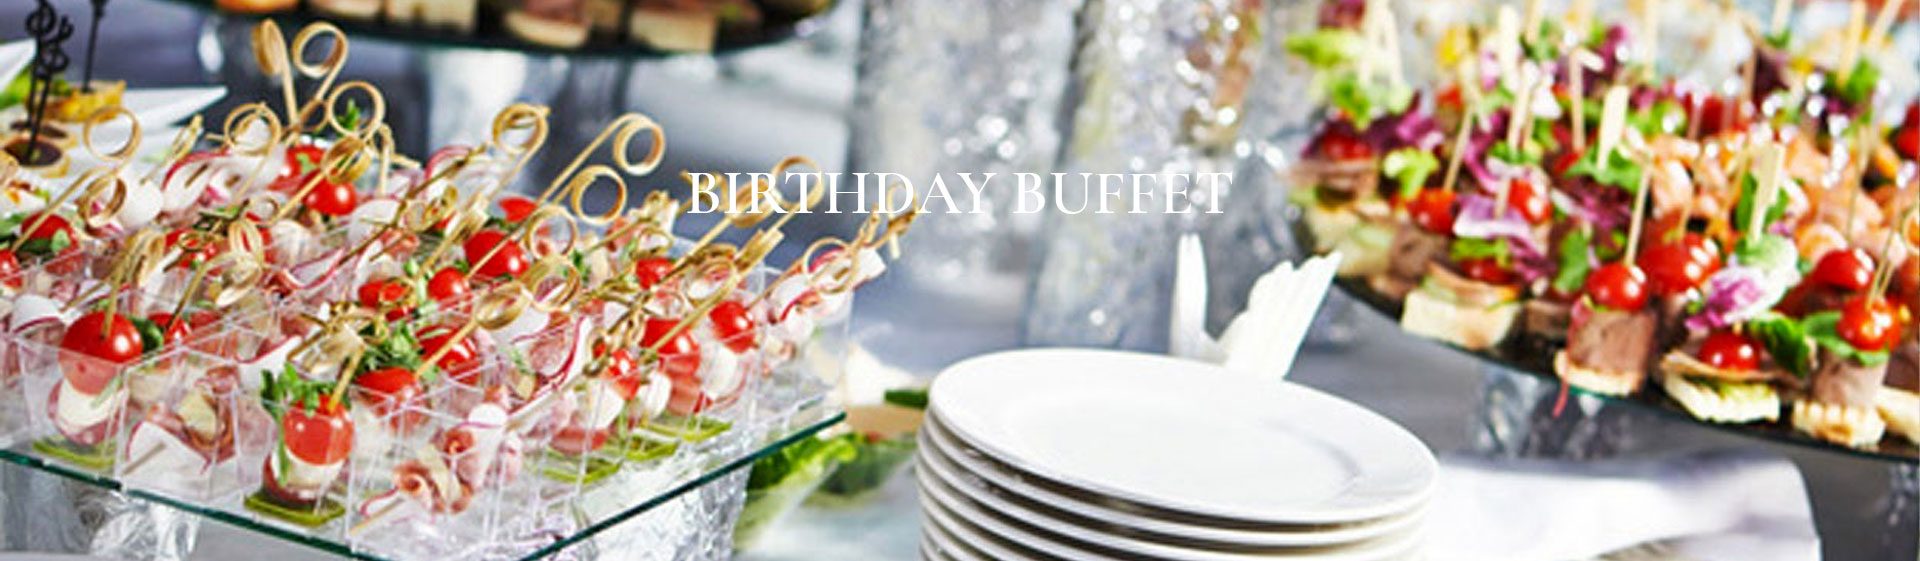 header-birthday-buffet